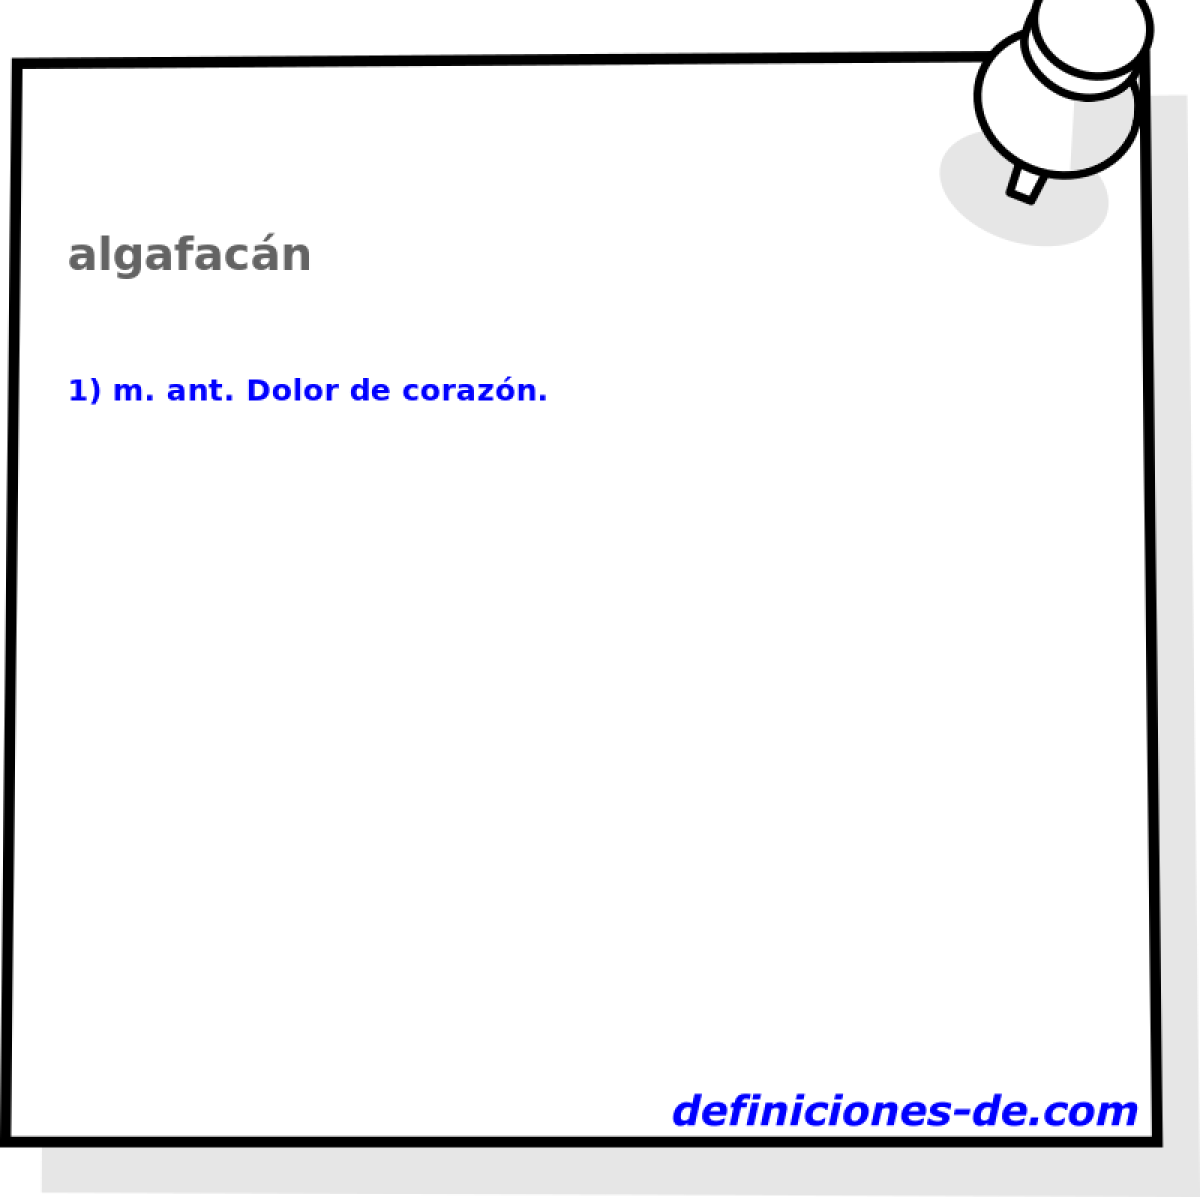 algafacn 